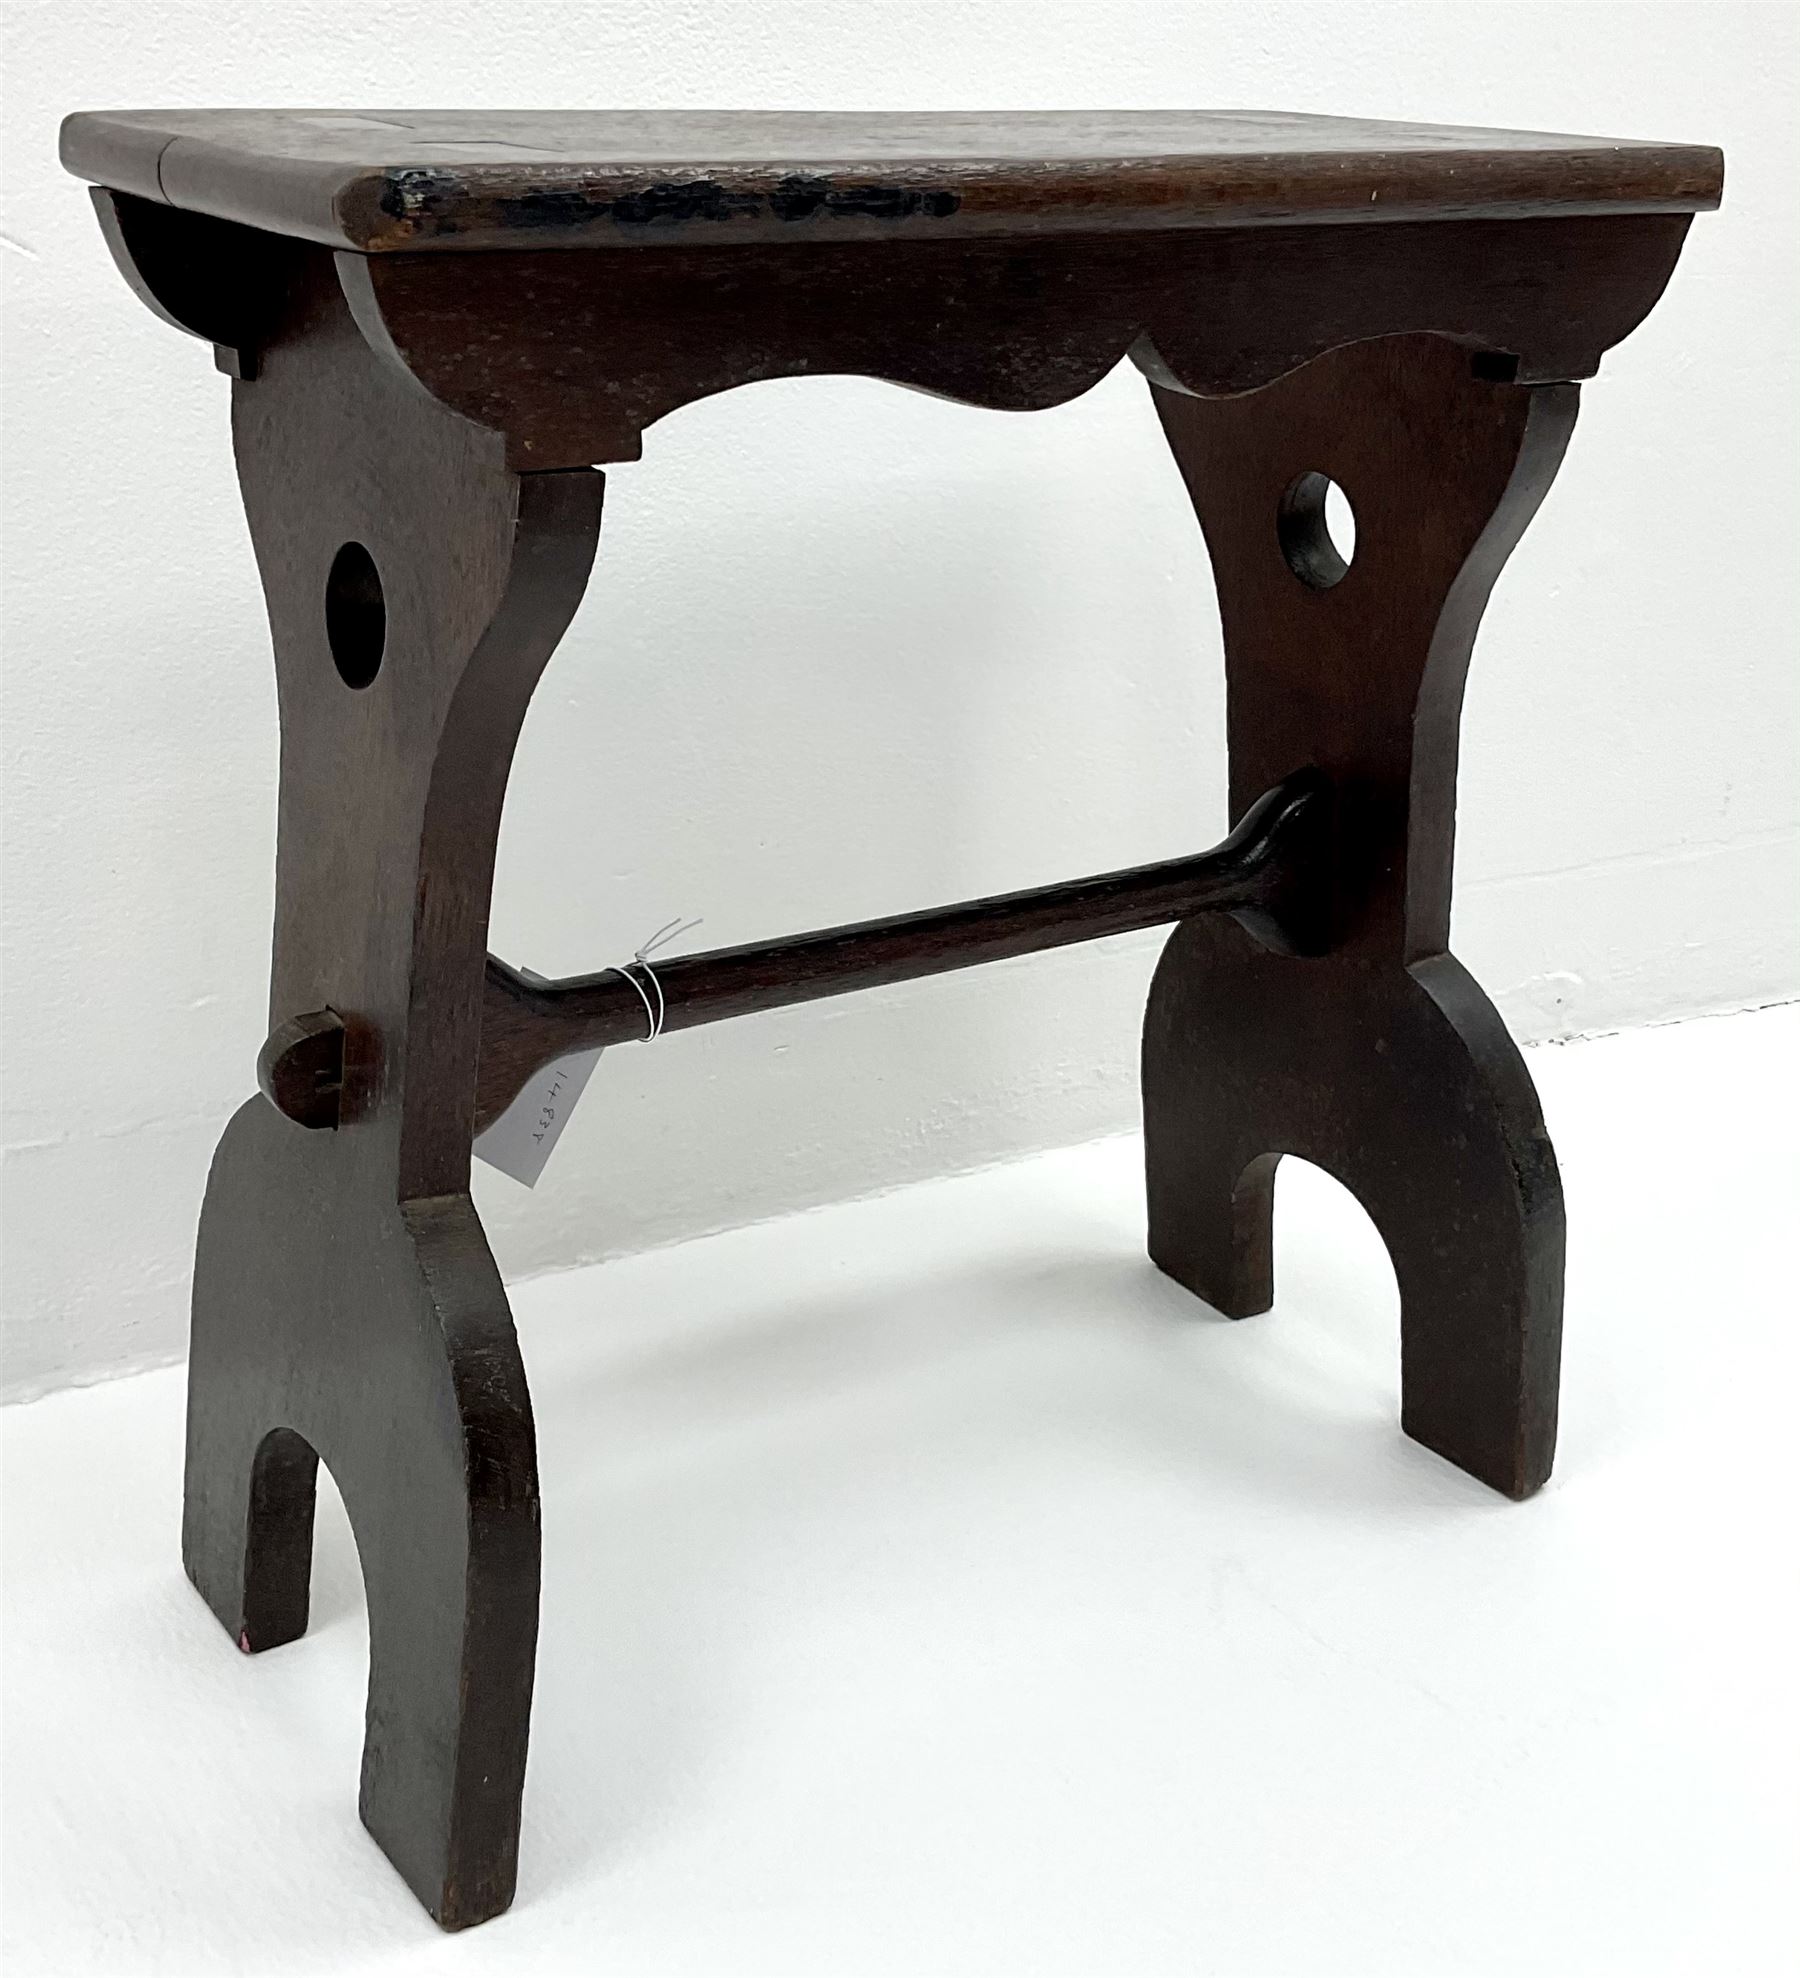 20th century hardwood vernacular joint stool - Image 3 of 3